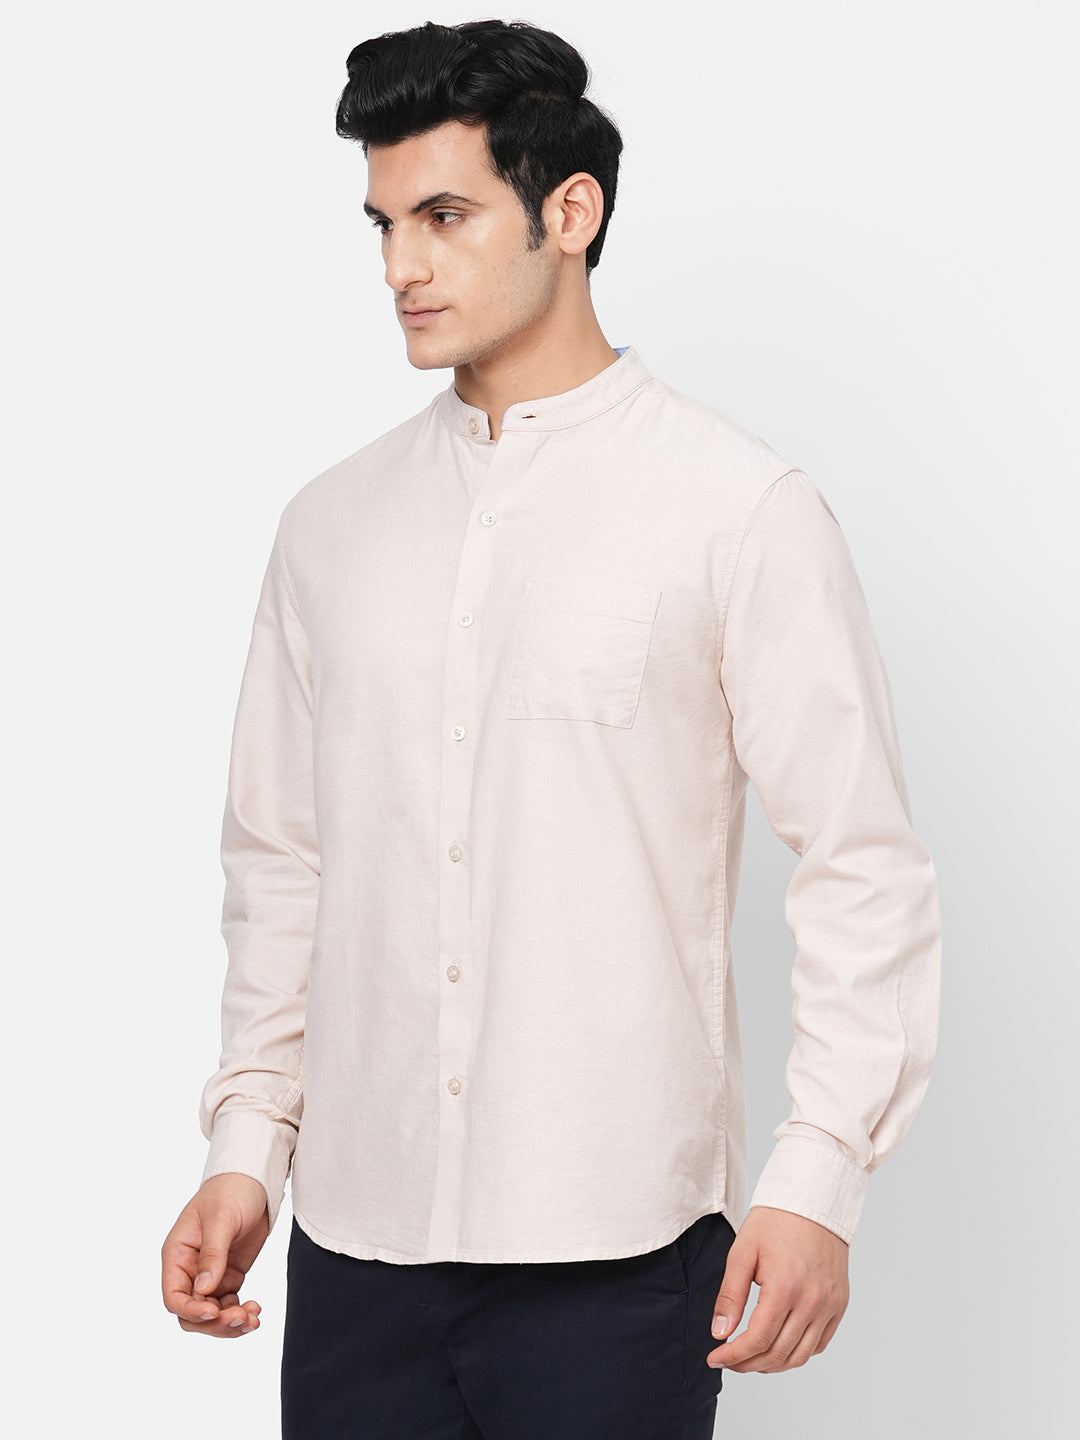 Men's Khaki Oxford Cotton Band Collar Long Sleeved Shirt